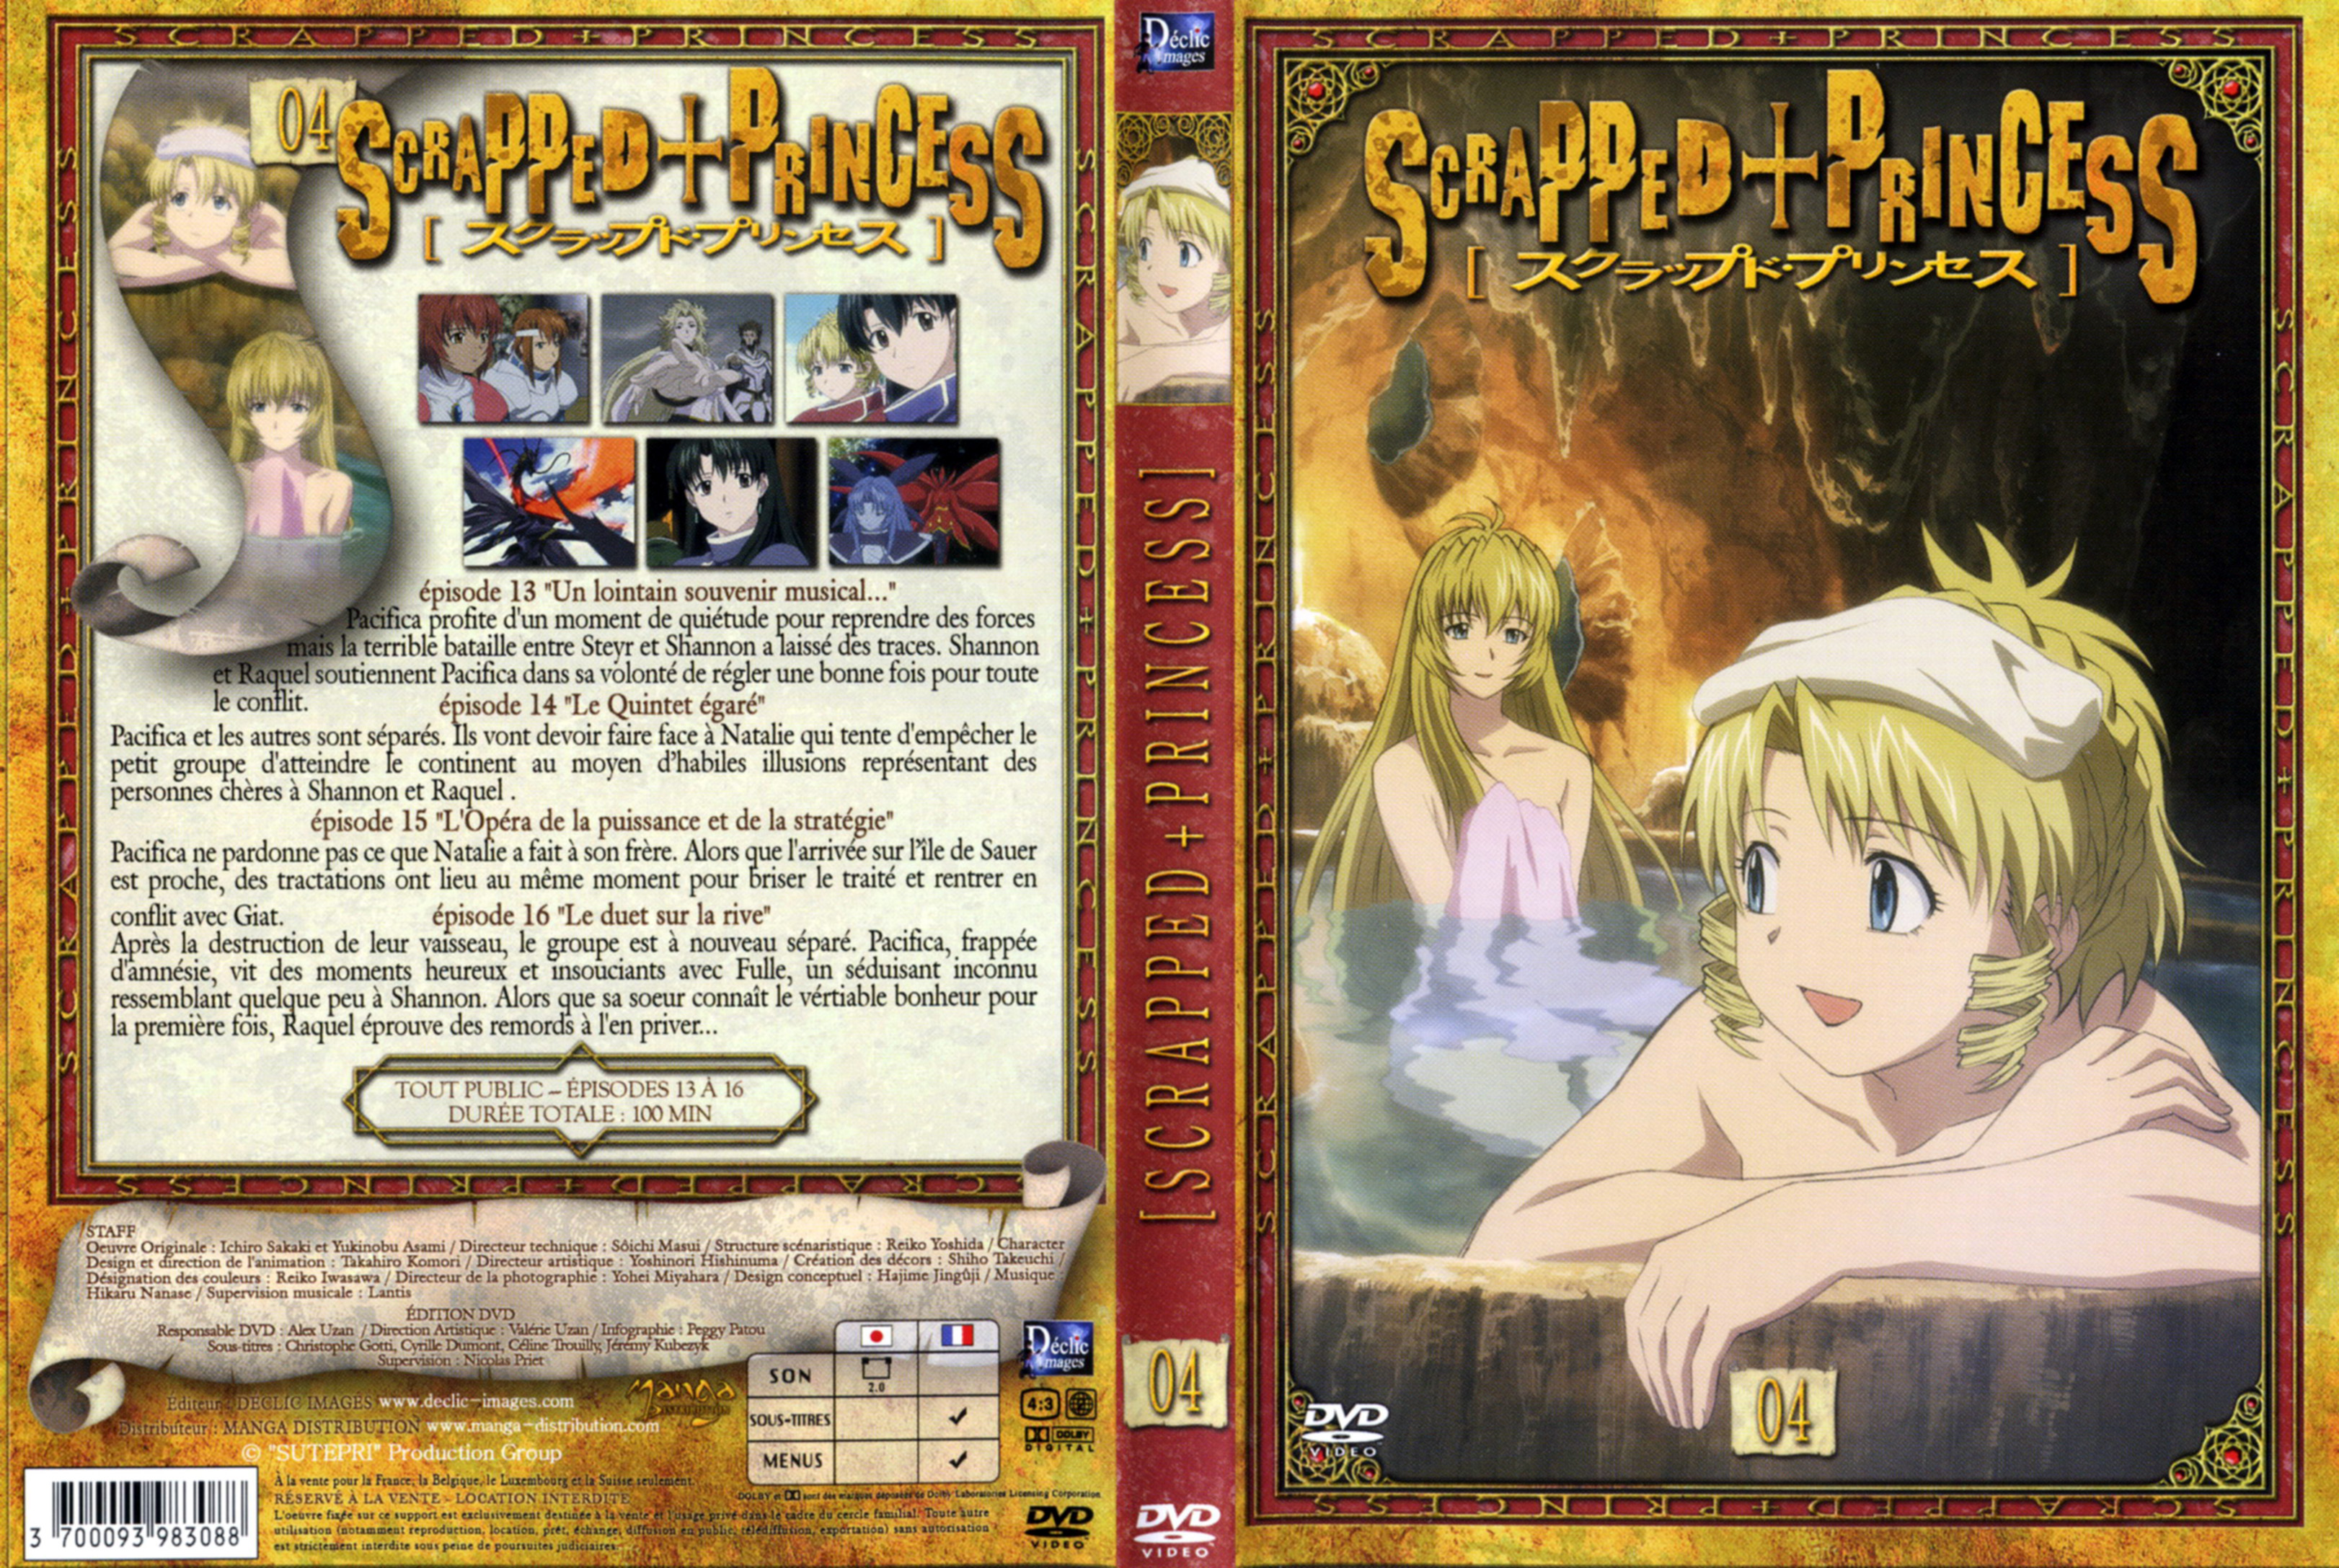 Jaquette DVD Scrapped princess vol 04